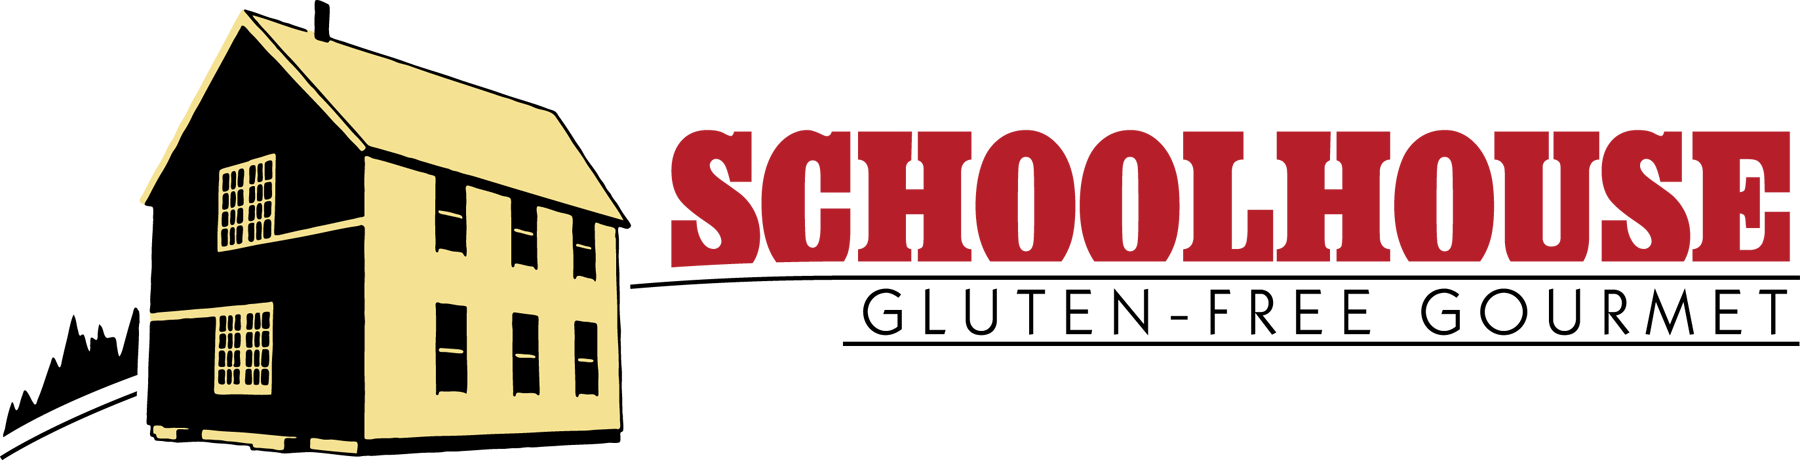 Schoolhouse Logo - Schoolhouse Gluten-Free Gourmet